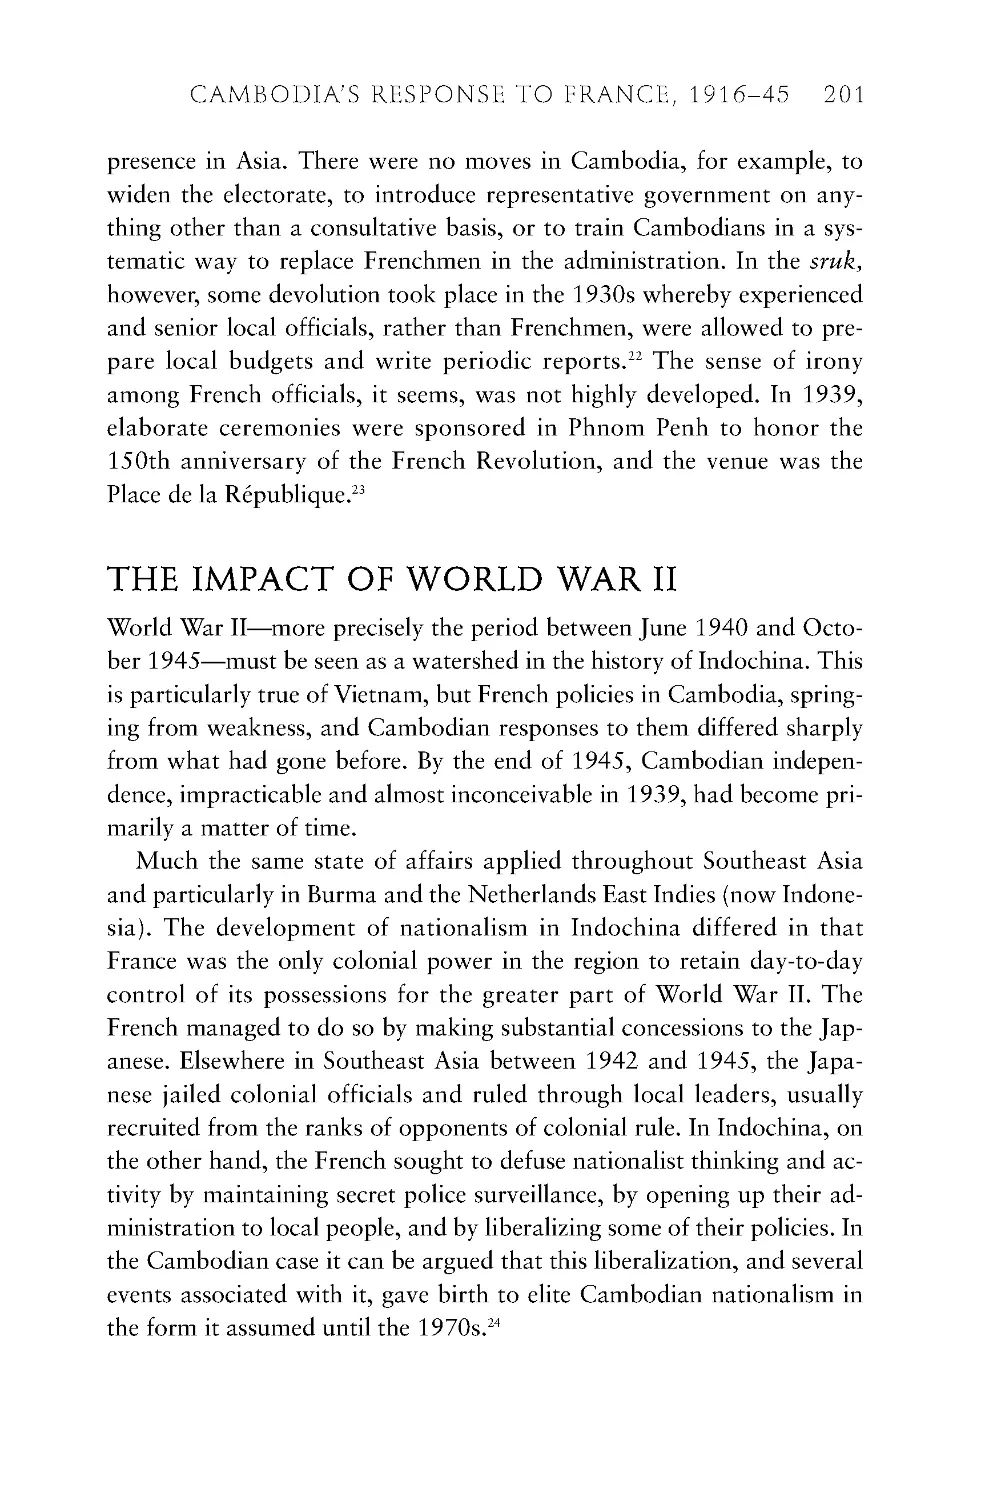 The Impact of World War II